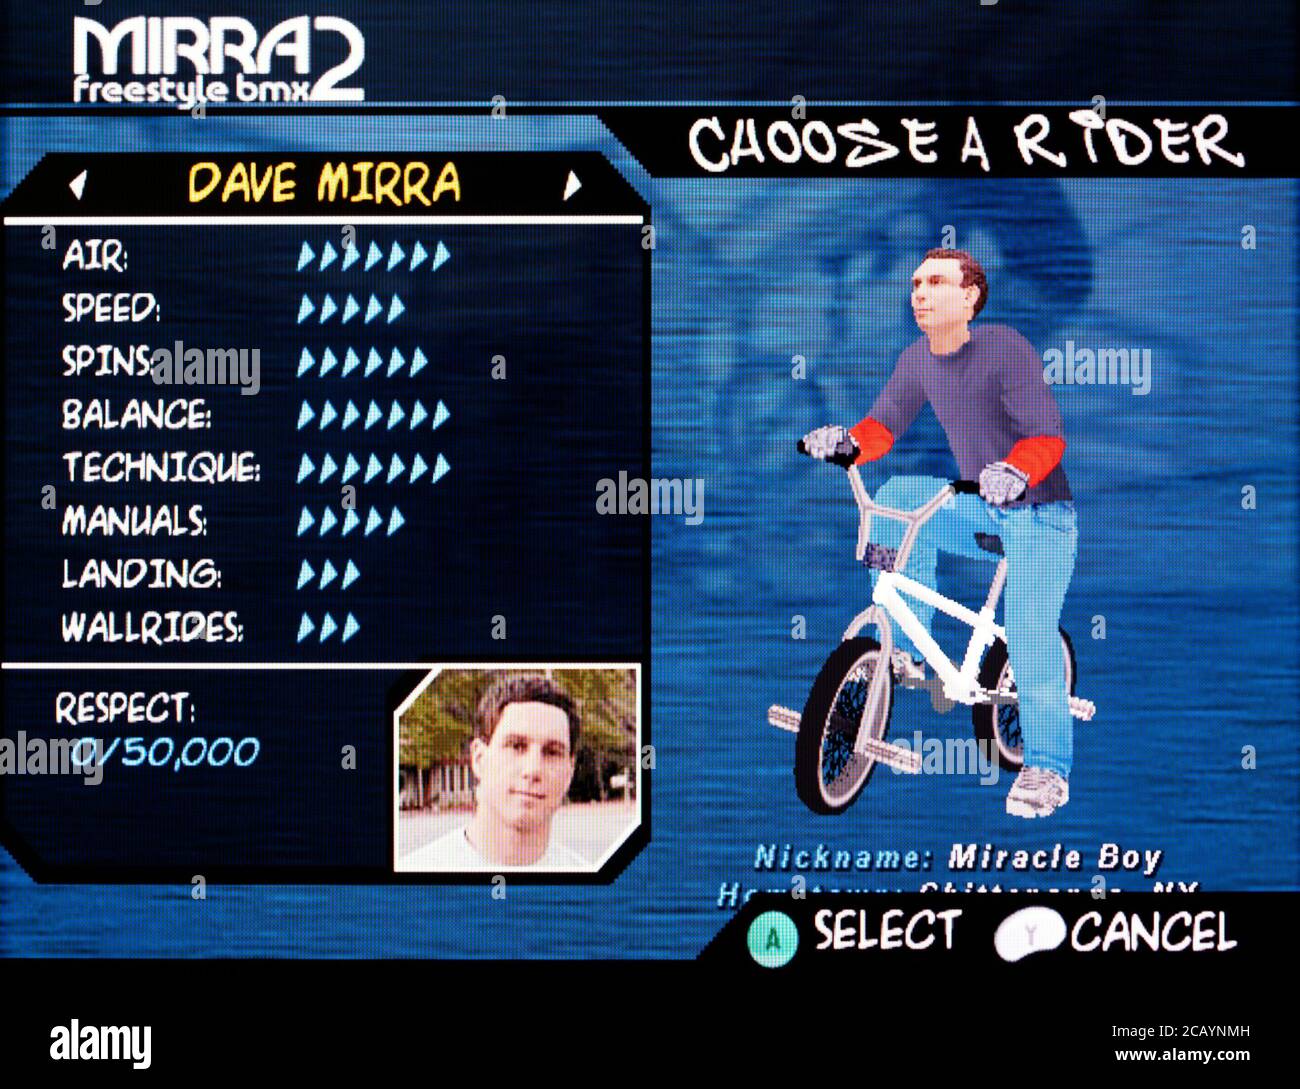 Dave Mirra Freestyle BMX 2 - Nintendo Gamecube Videogame - Editorial use only Stock Photo